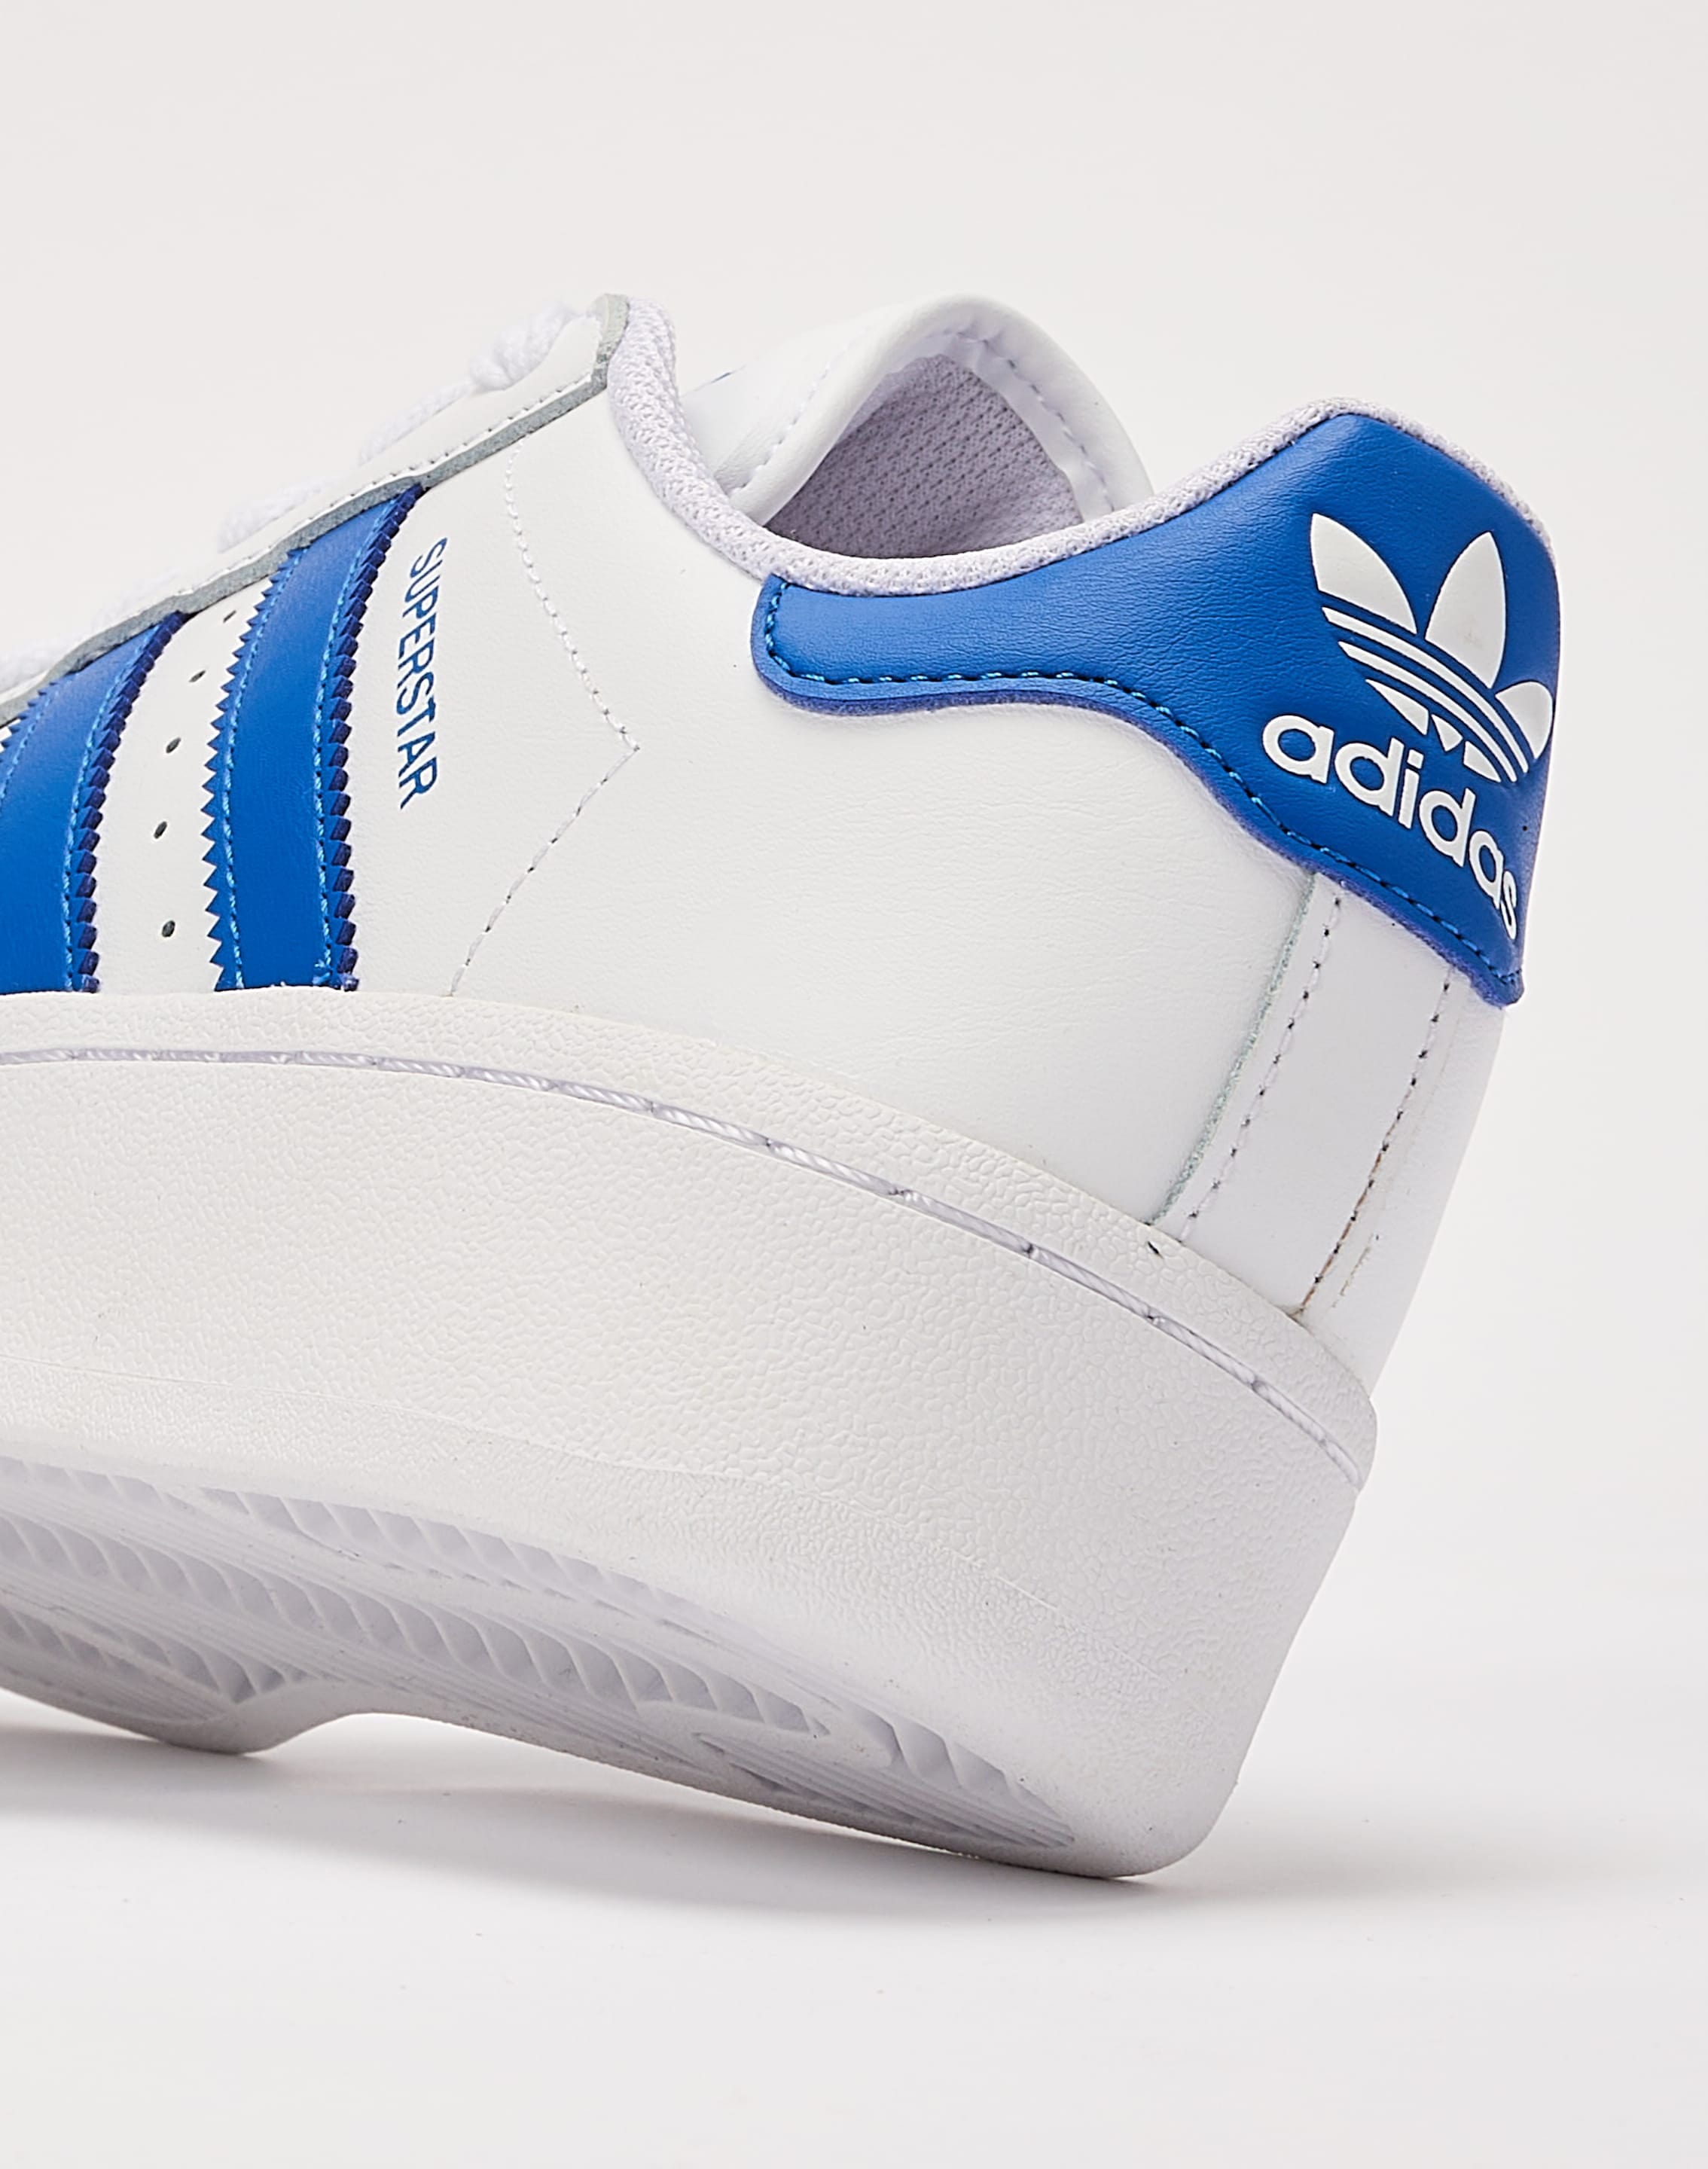 Adidas Superstar – DTLR